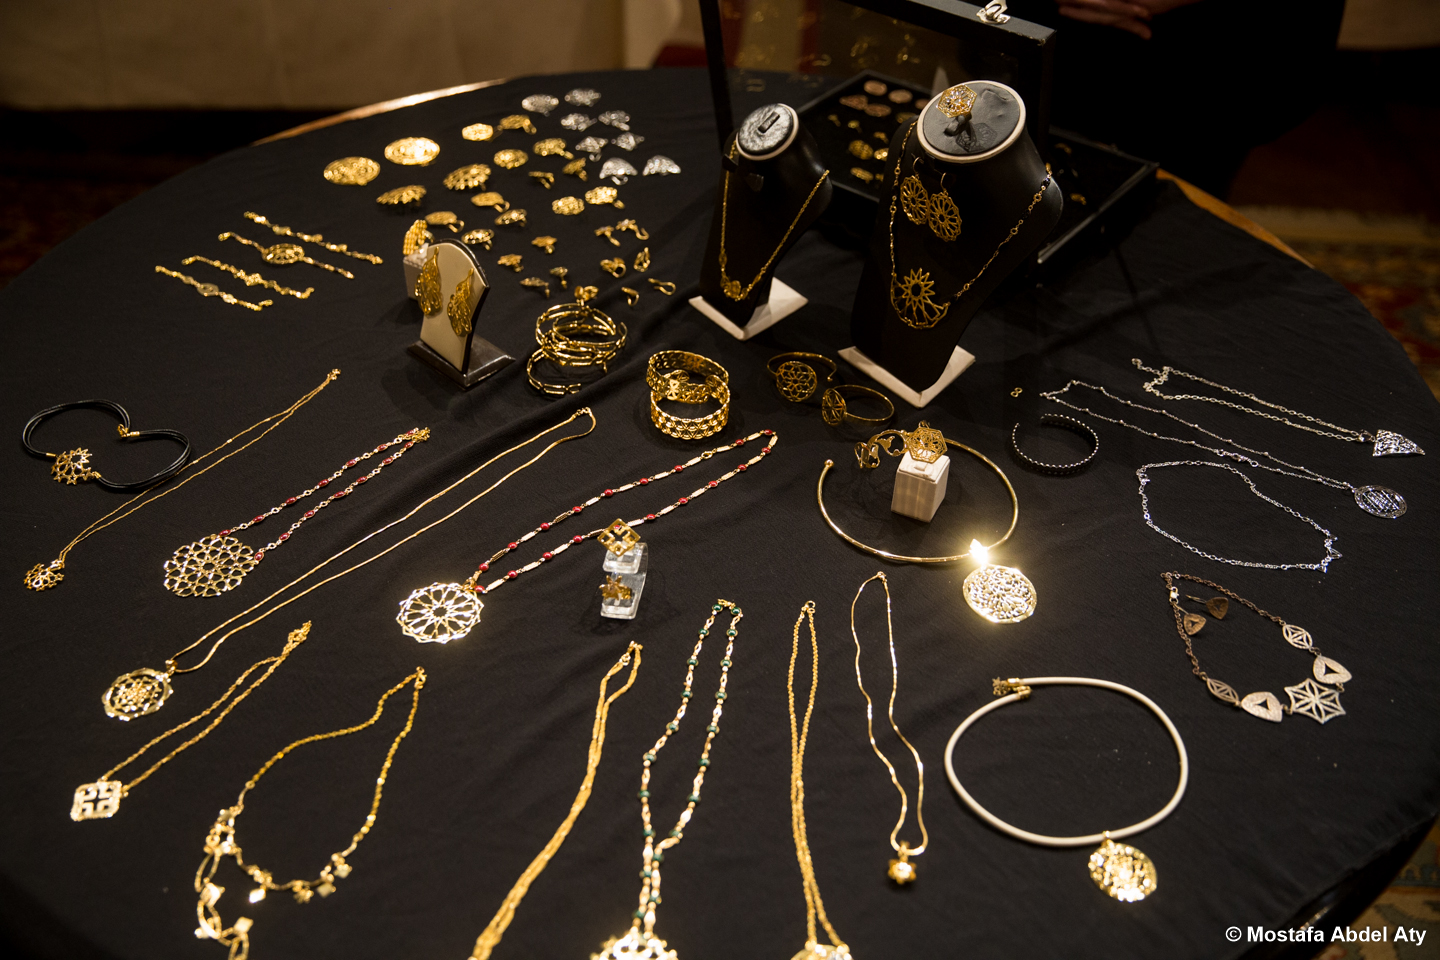 jewelry showcased at the exhibit